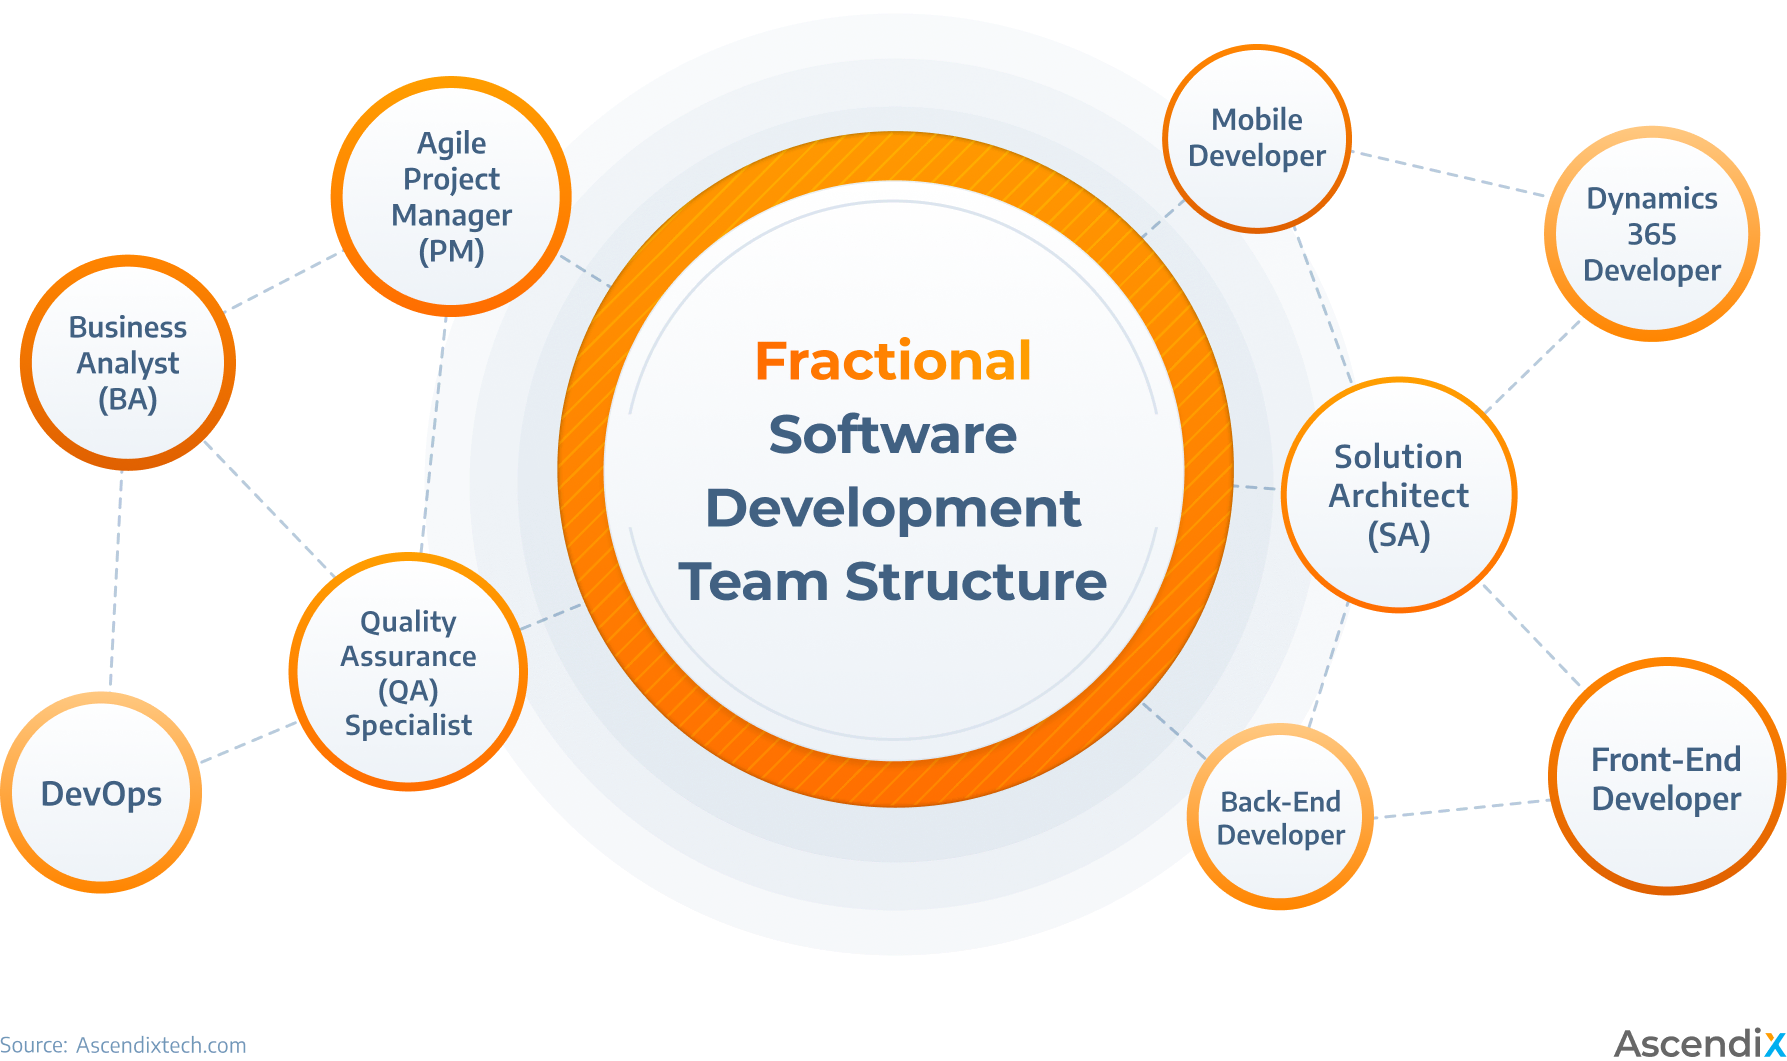 Fractional Software Development Team Structure